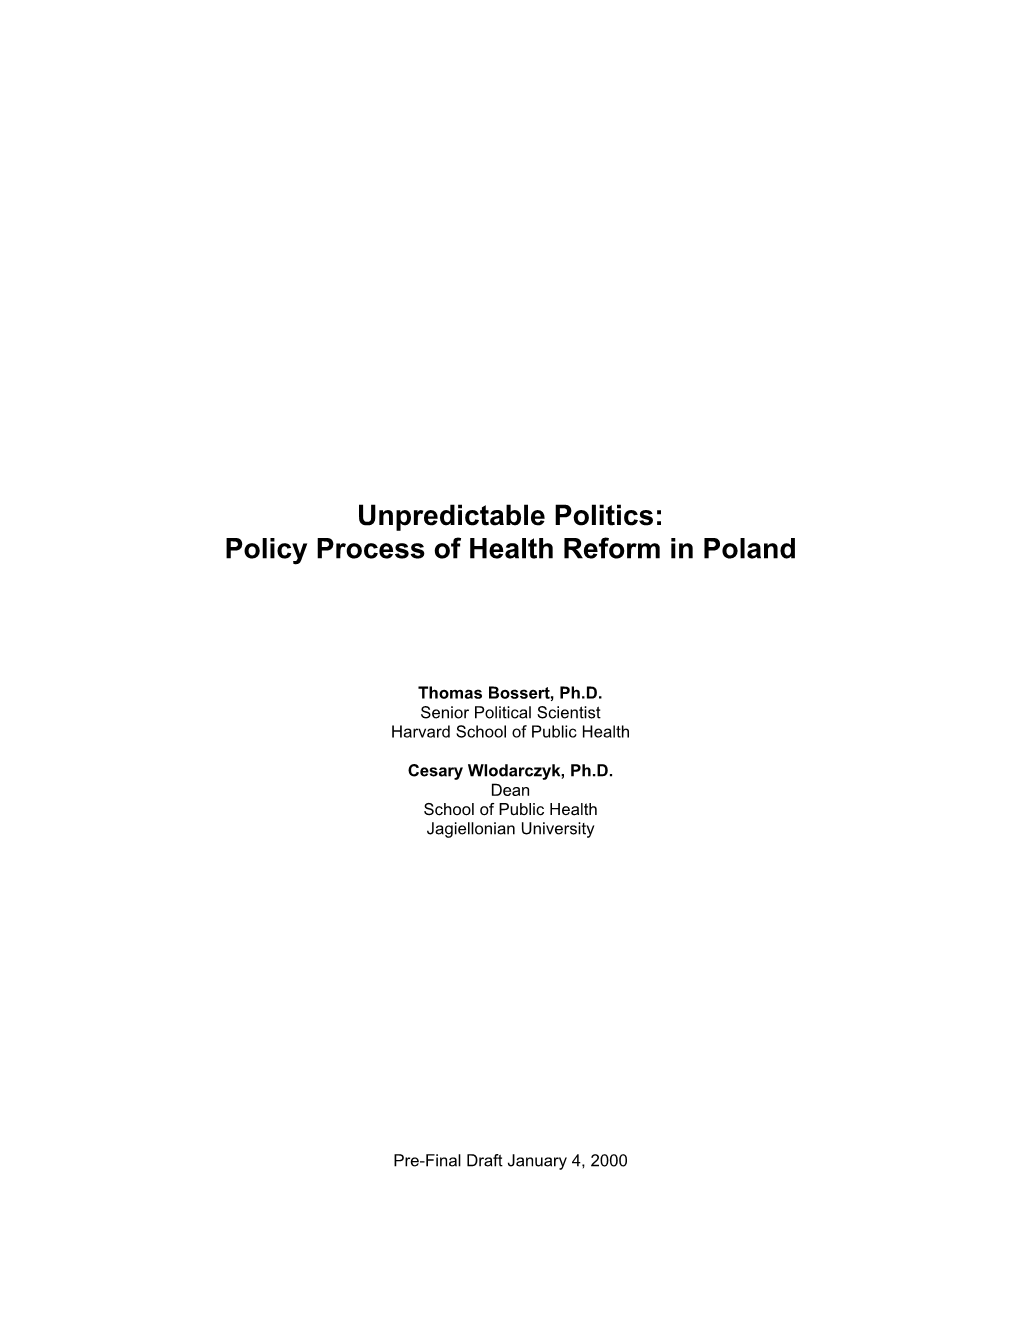 Unpredictable Politics: Policy Process of Health Reform in Poland